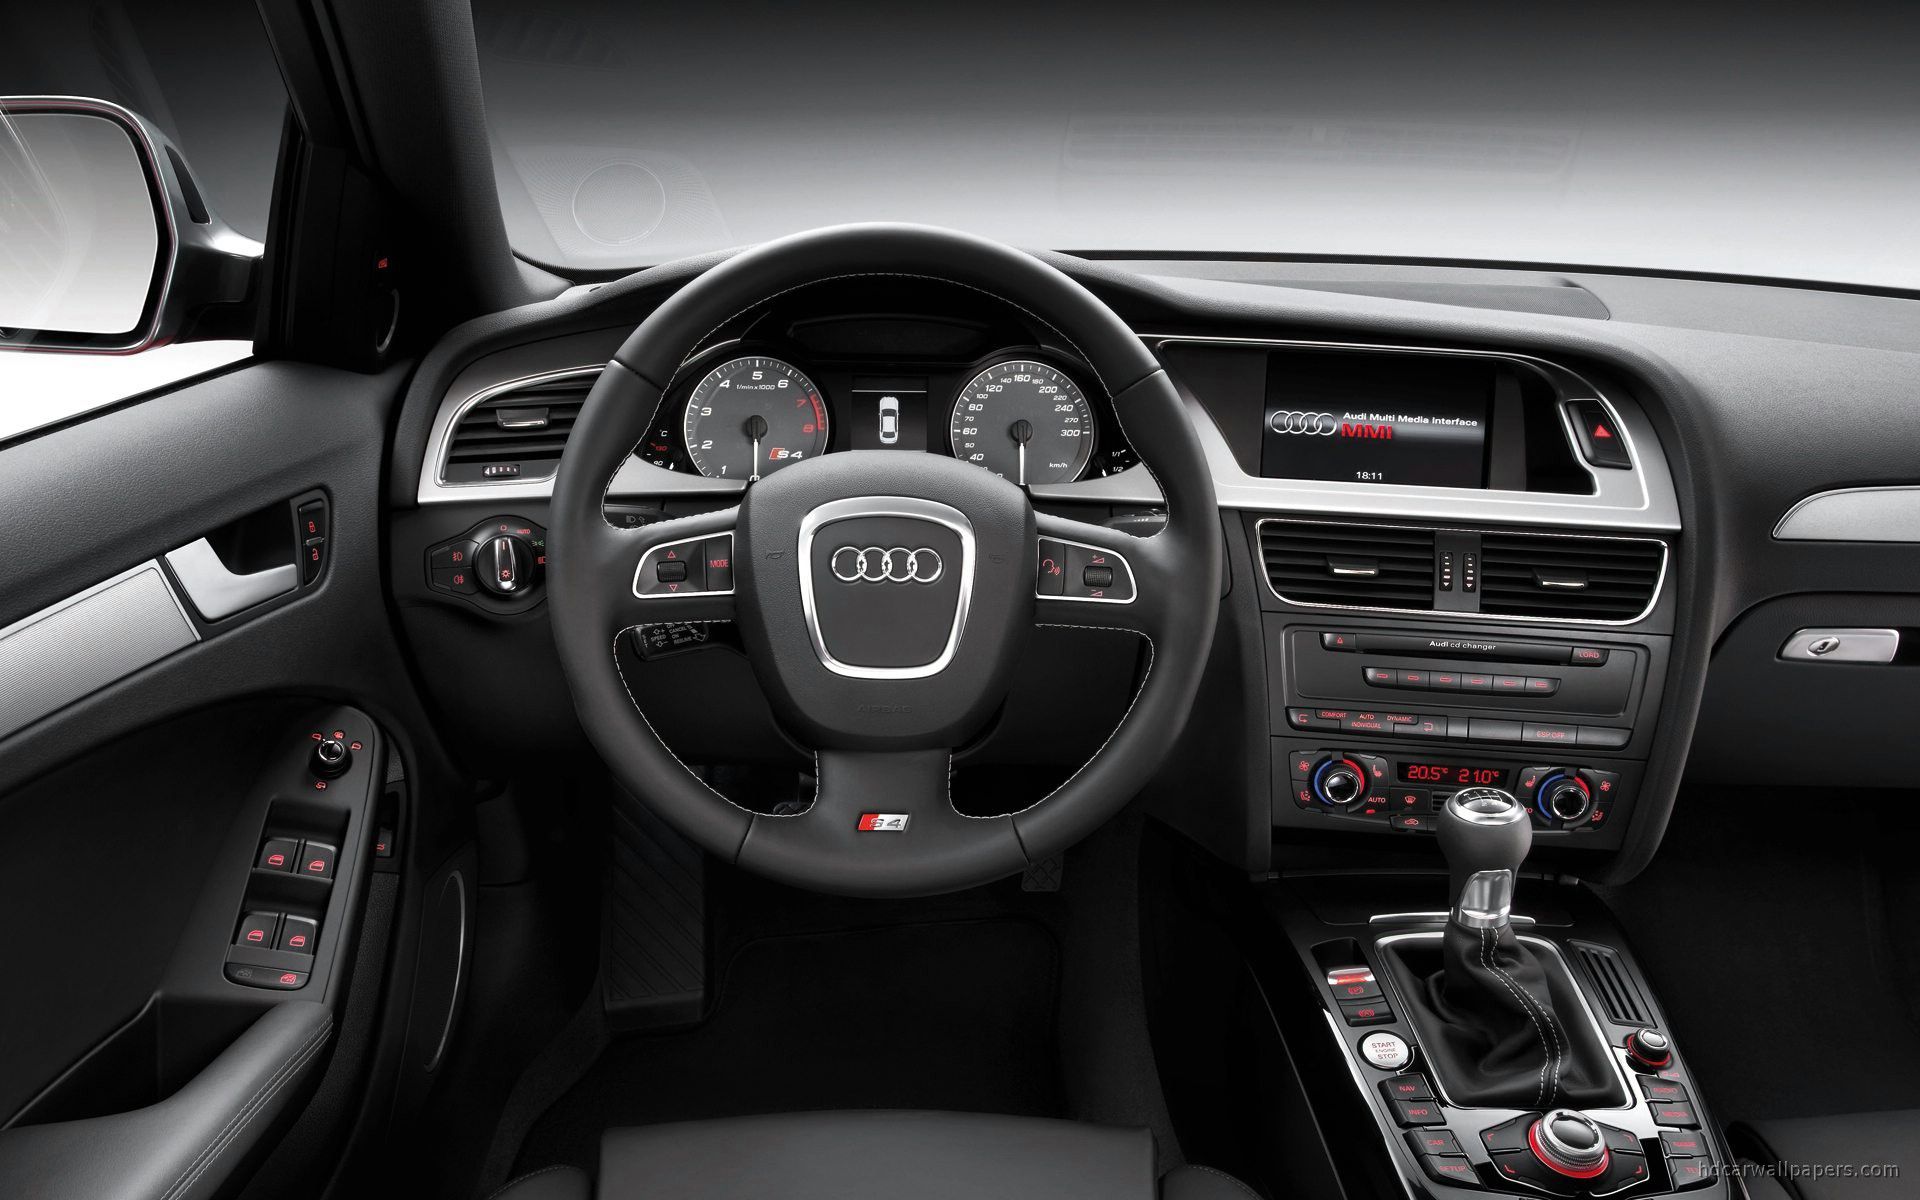 Audi S4 Interior Wallpaper. HD Car Background